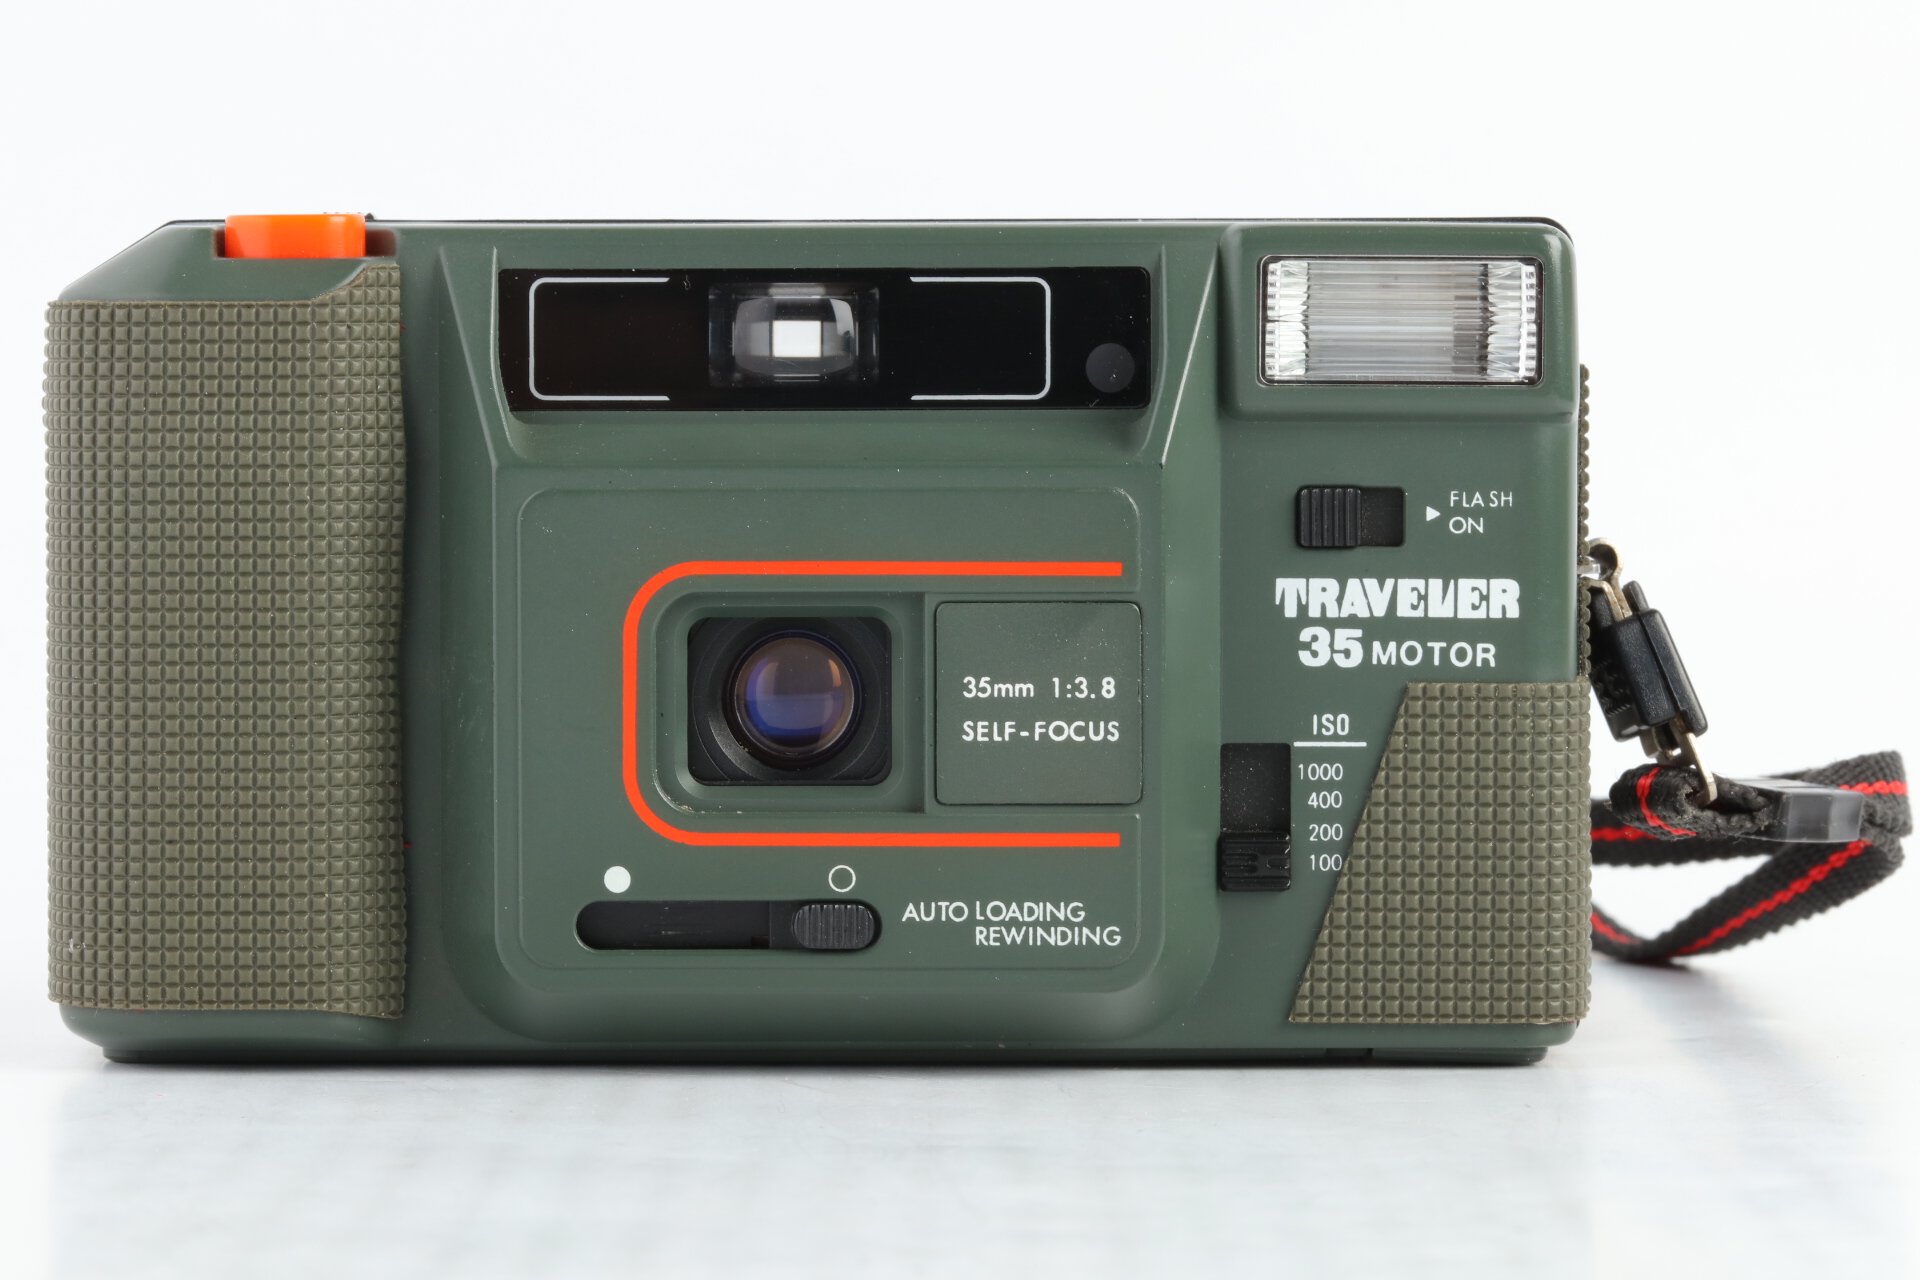 Traveler 35Motor 35mm 3,8 Self-Focus